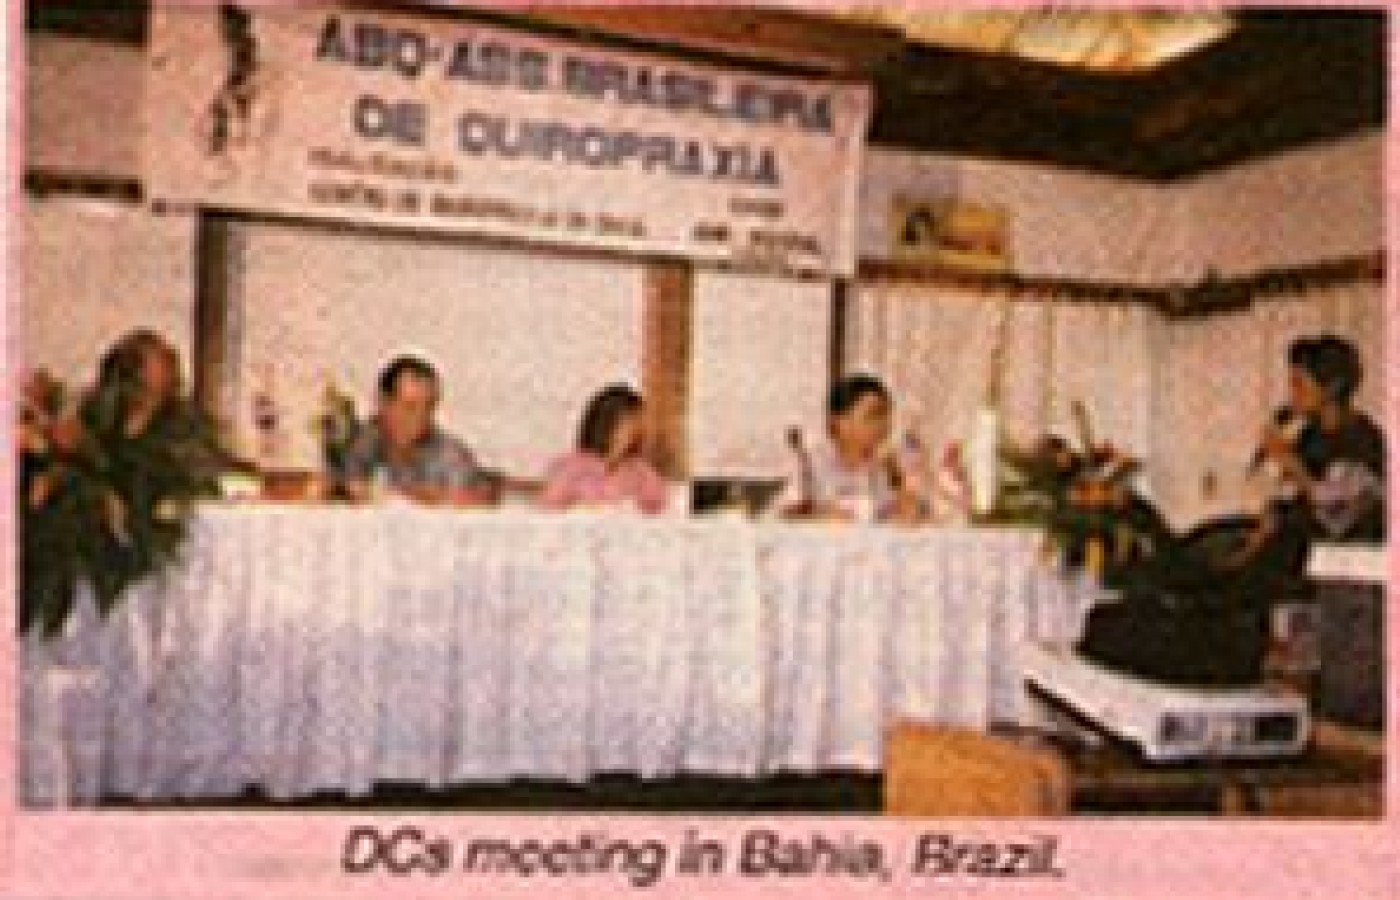 DCs meeting in Bahia, Brazil